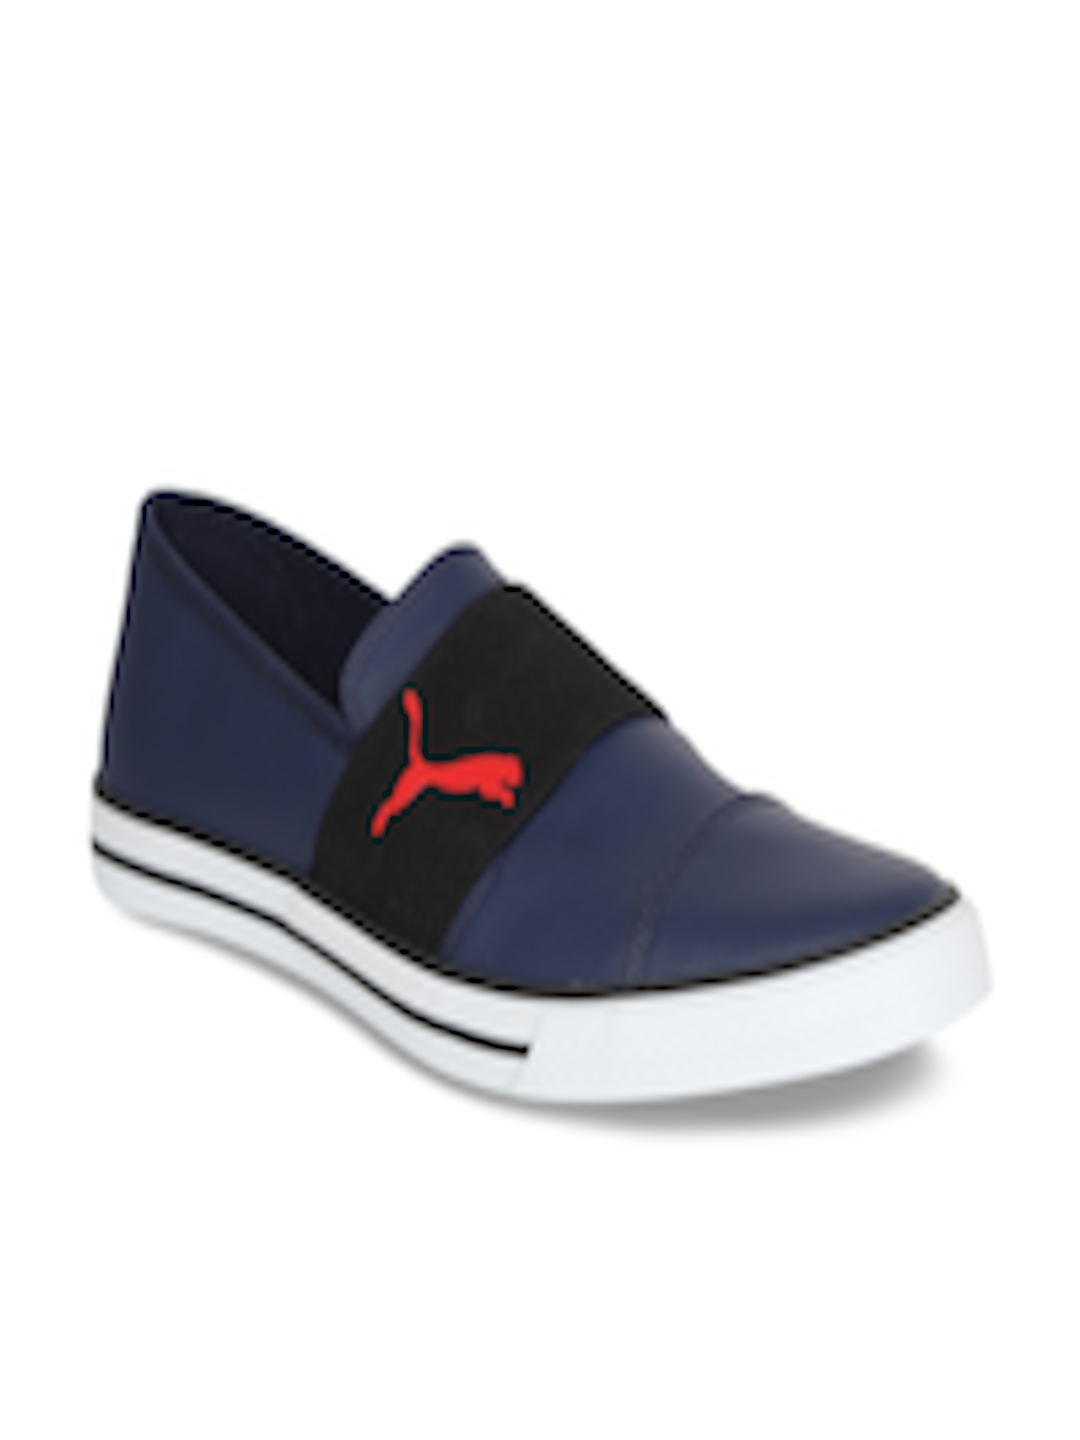 Buy Puma Men Navy Blue Colourblocked Slip On Sneakers - Casual Shoes ...